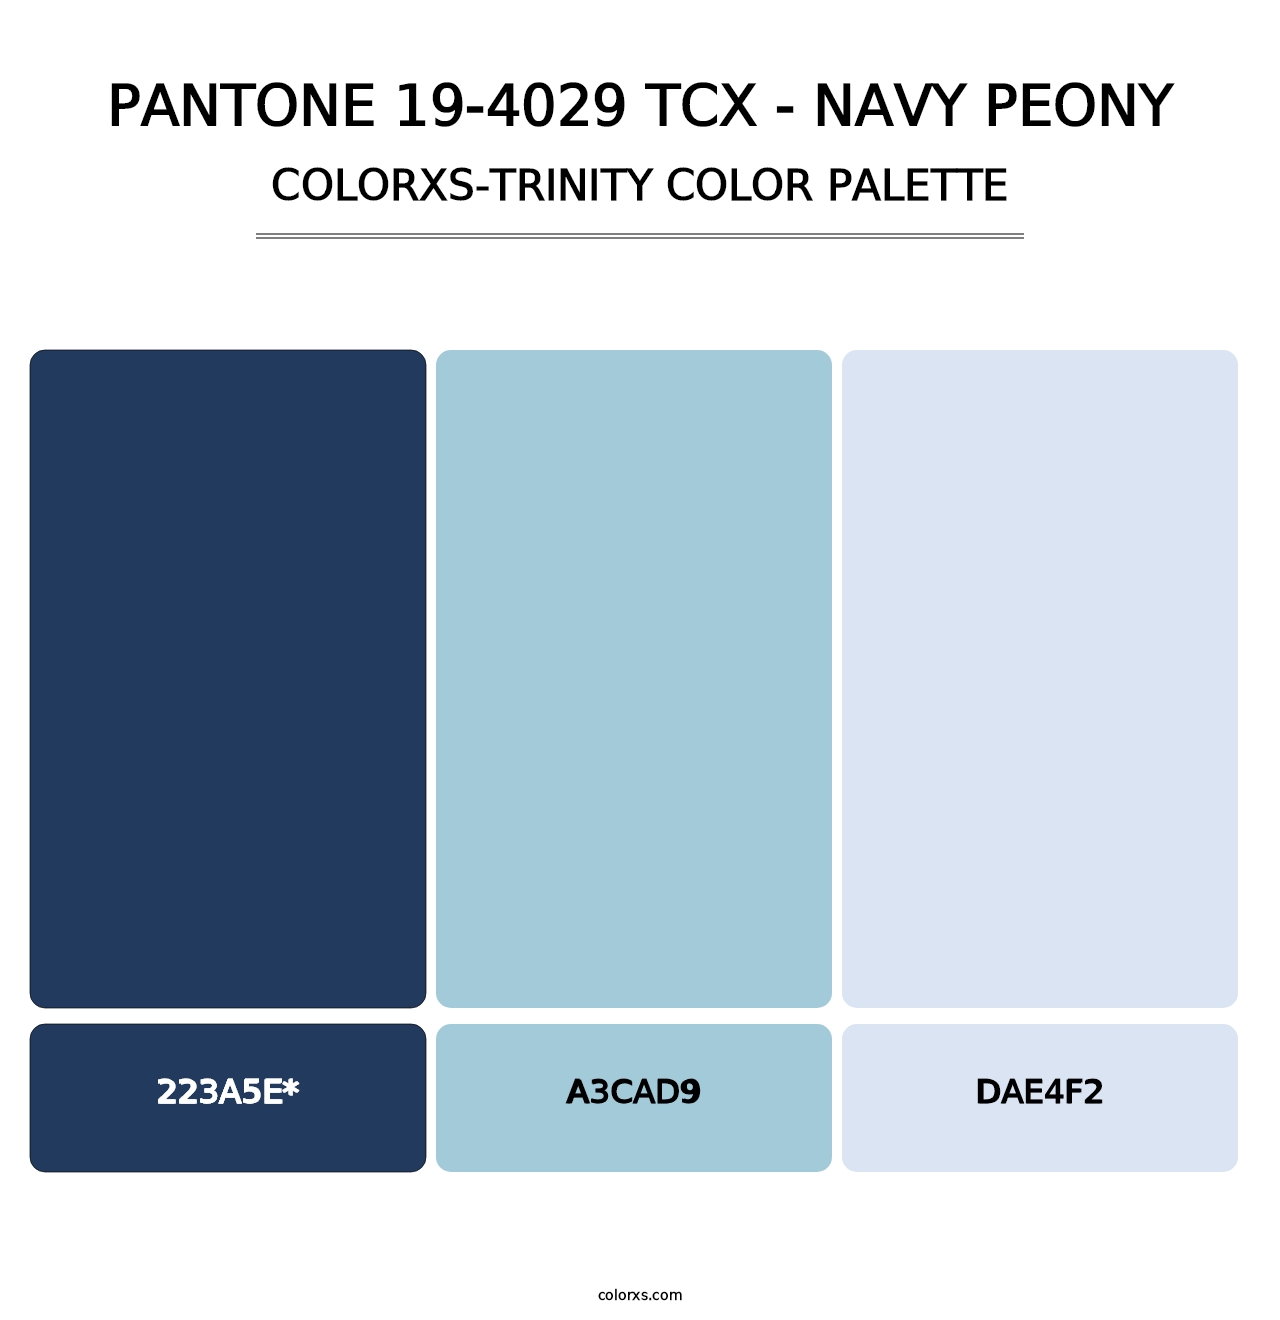 PANTONE 19-4029 TCX - Navy Peony - Colorxs Trinity Palette